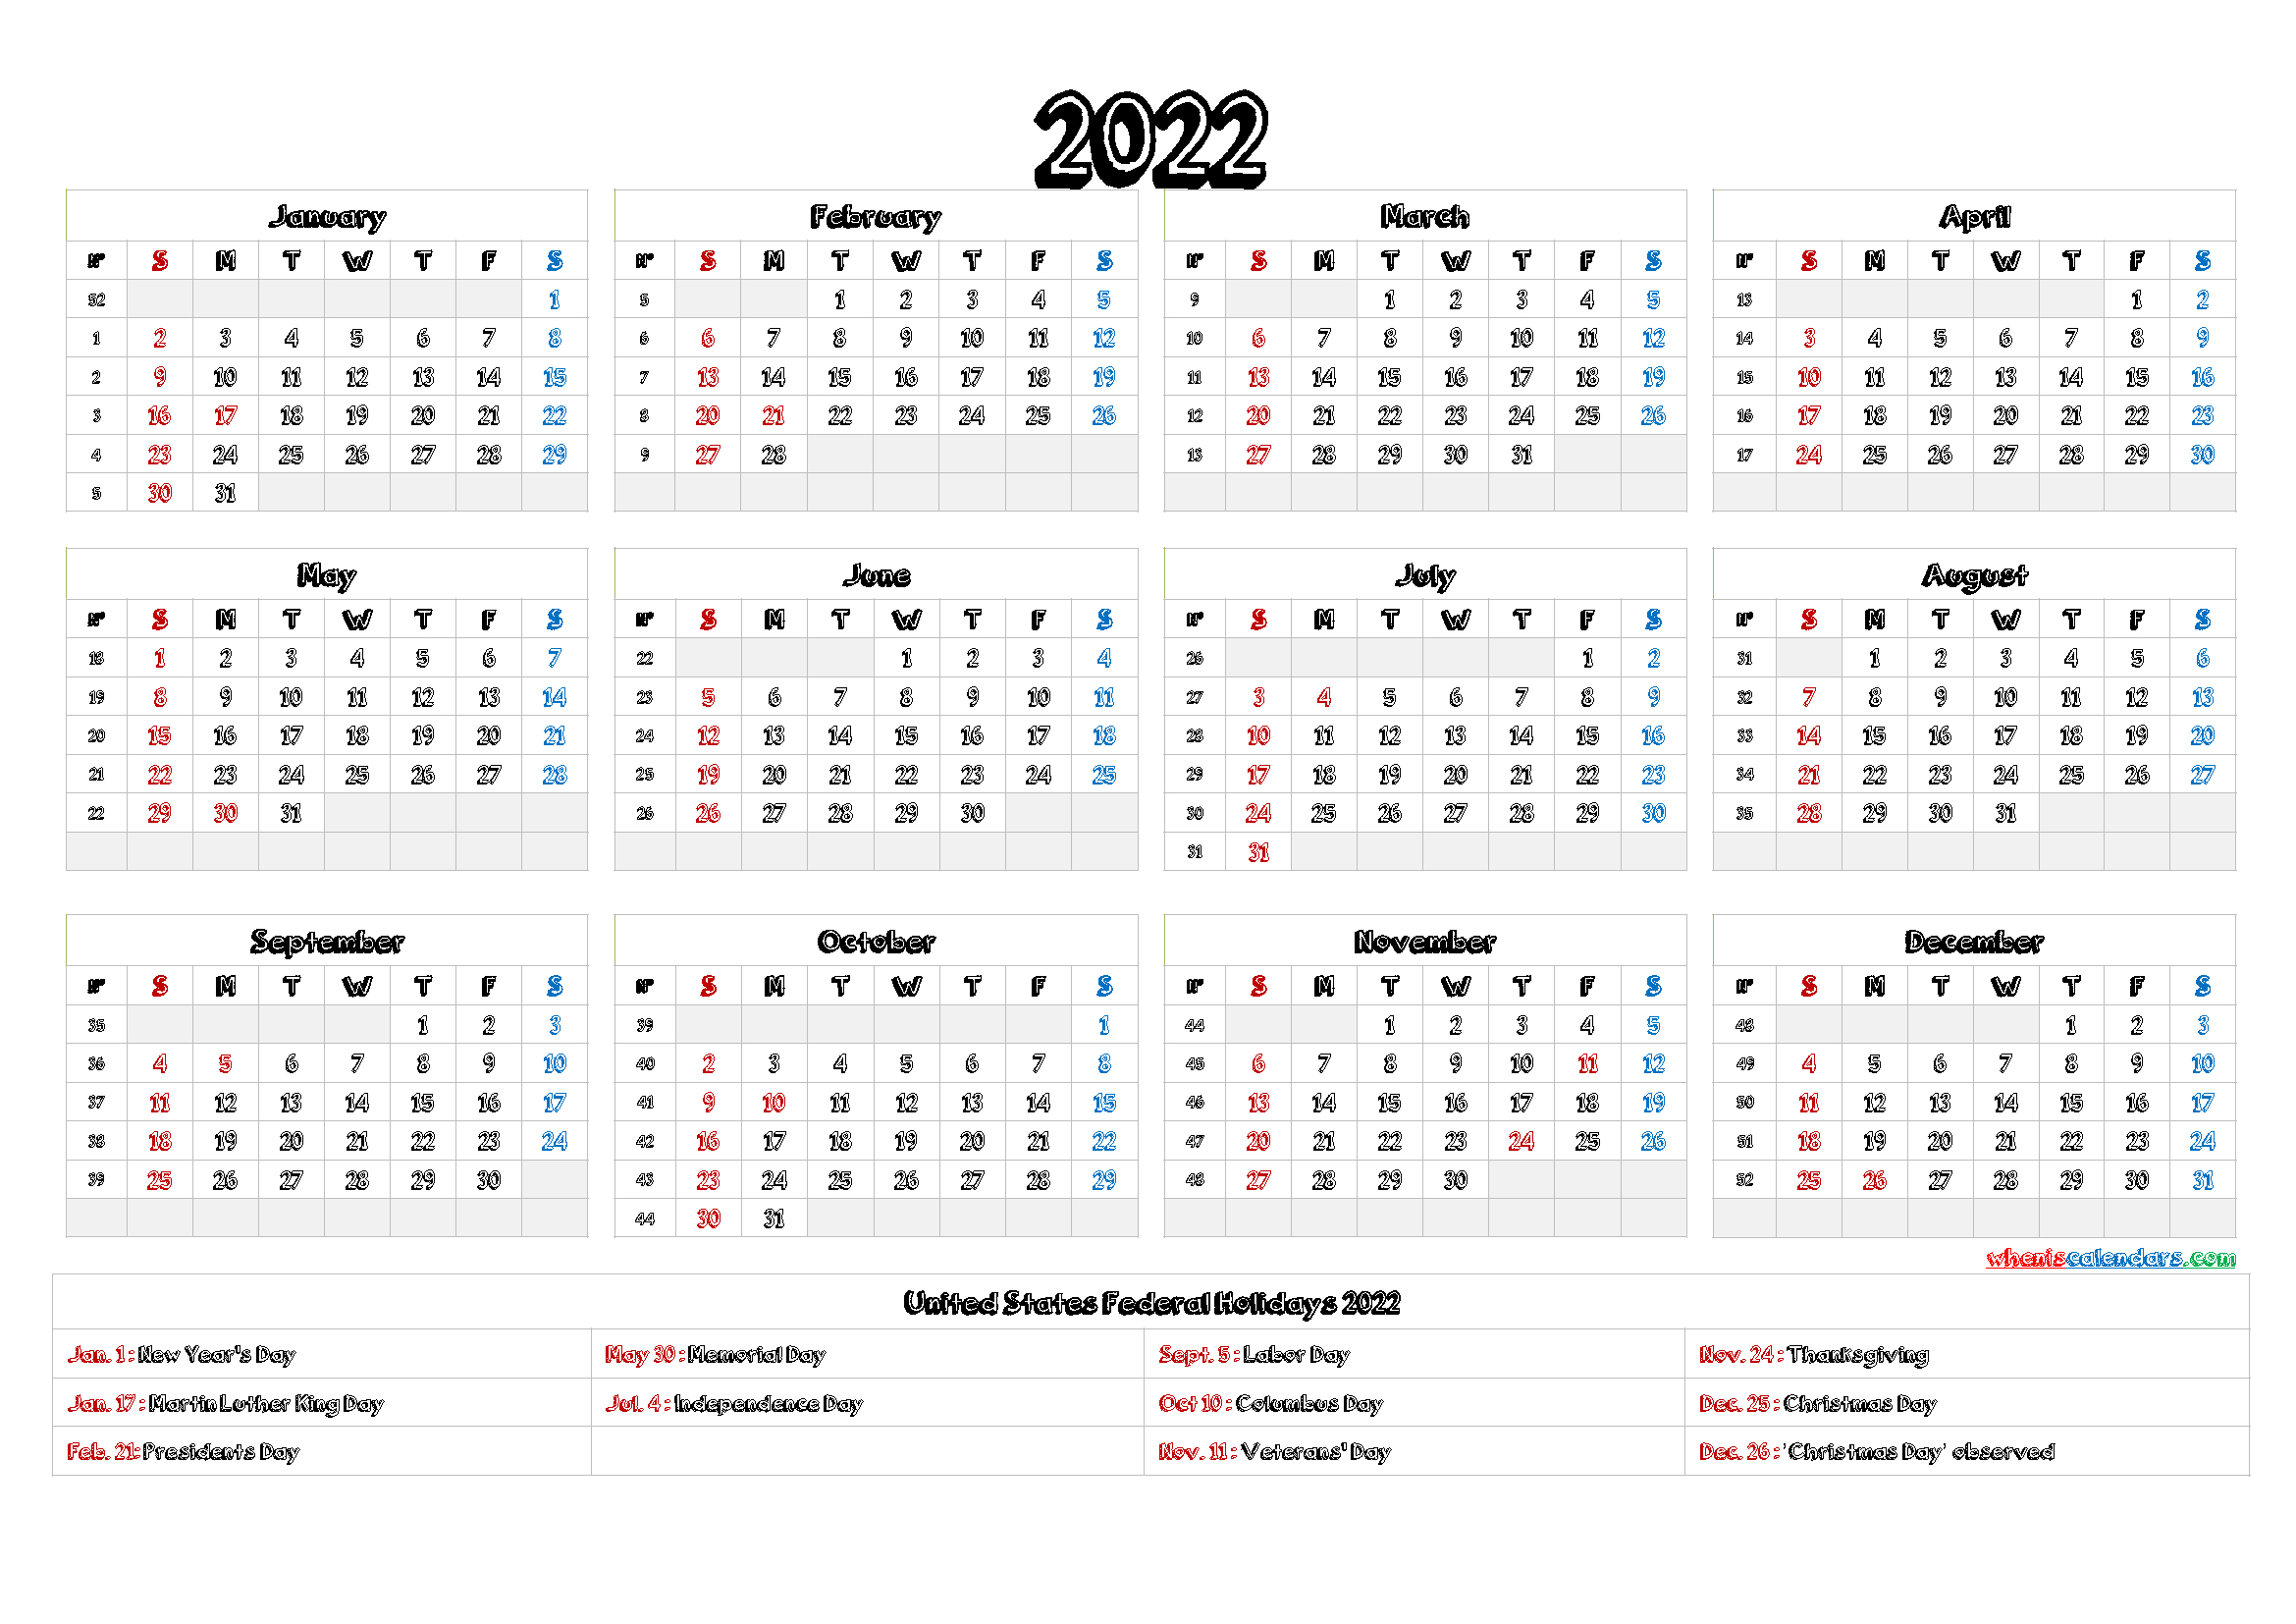 Take March 9 2022 Calendar